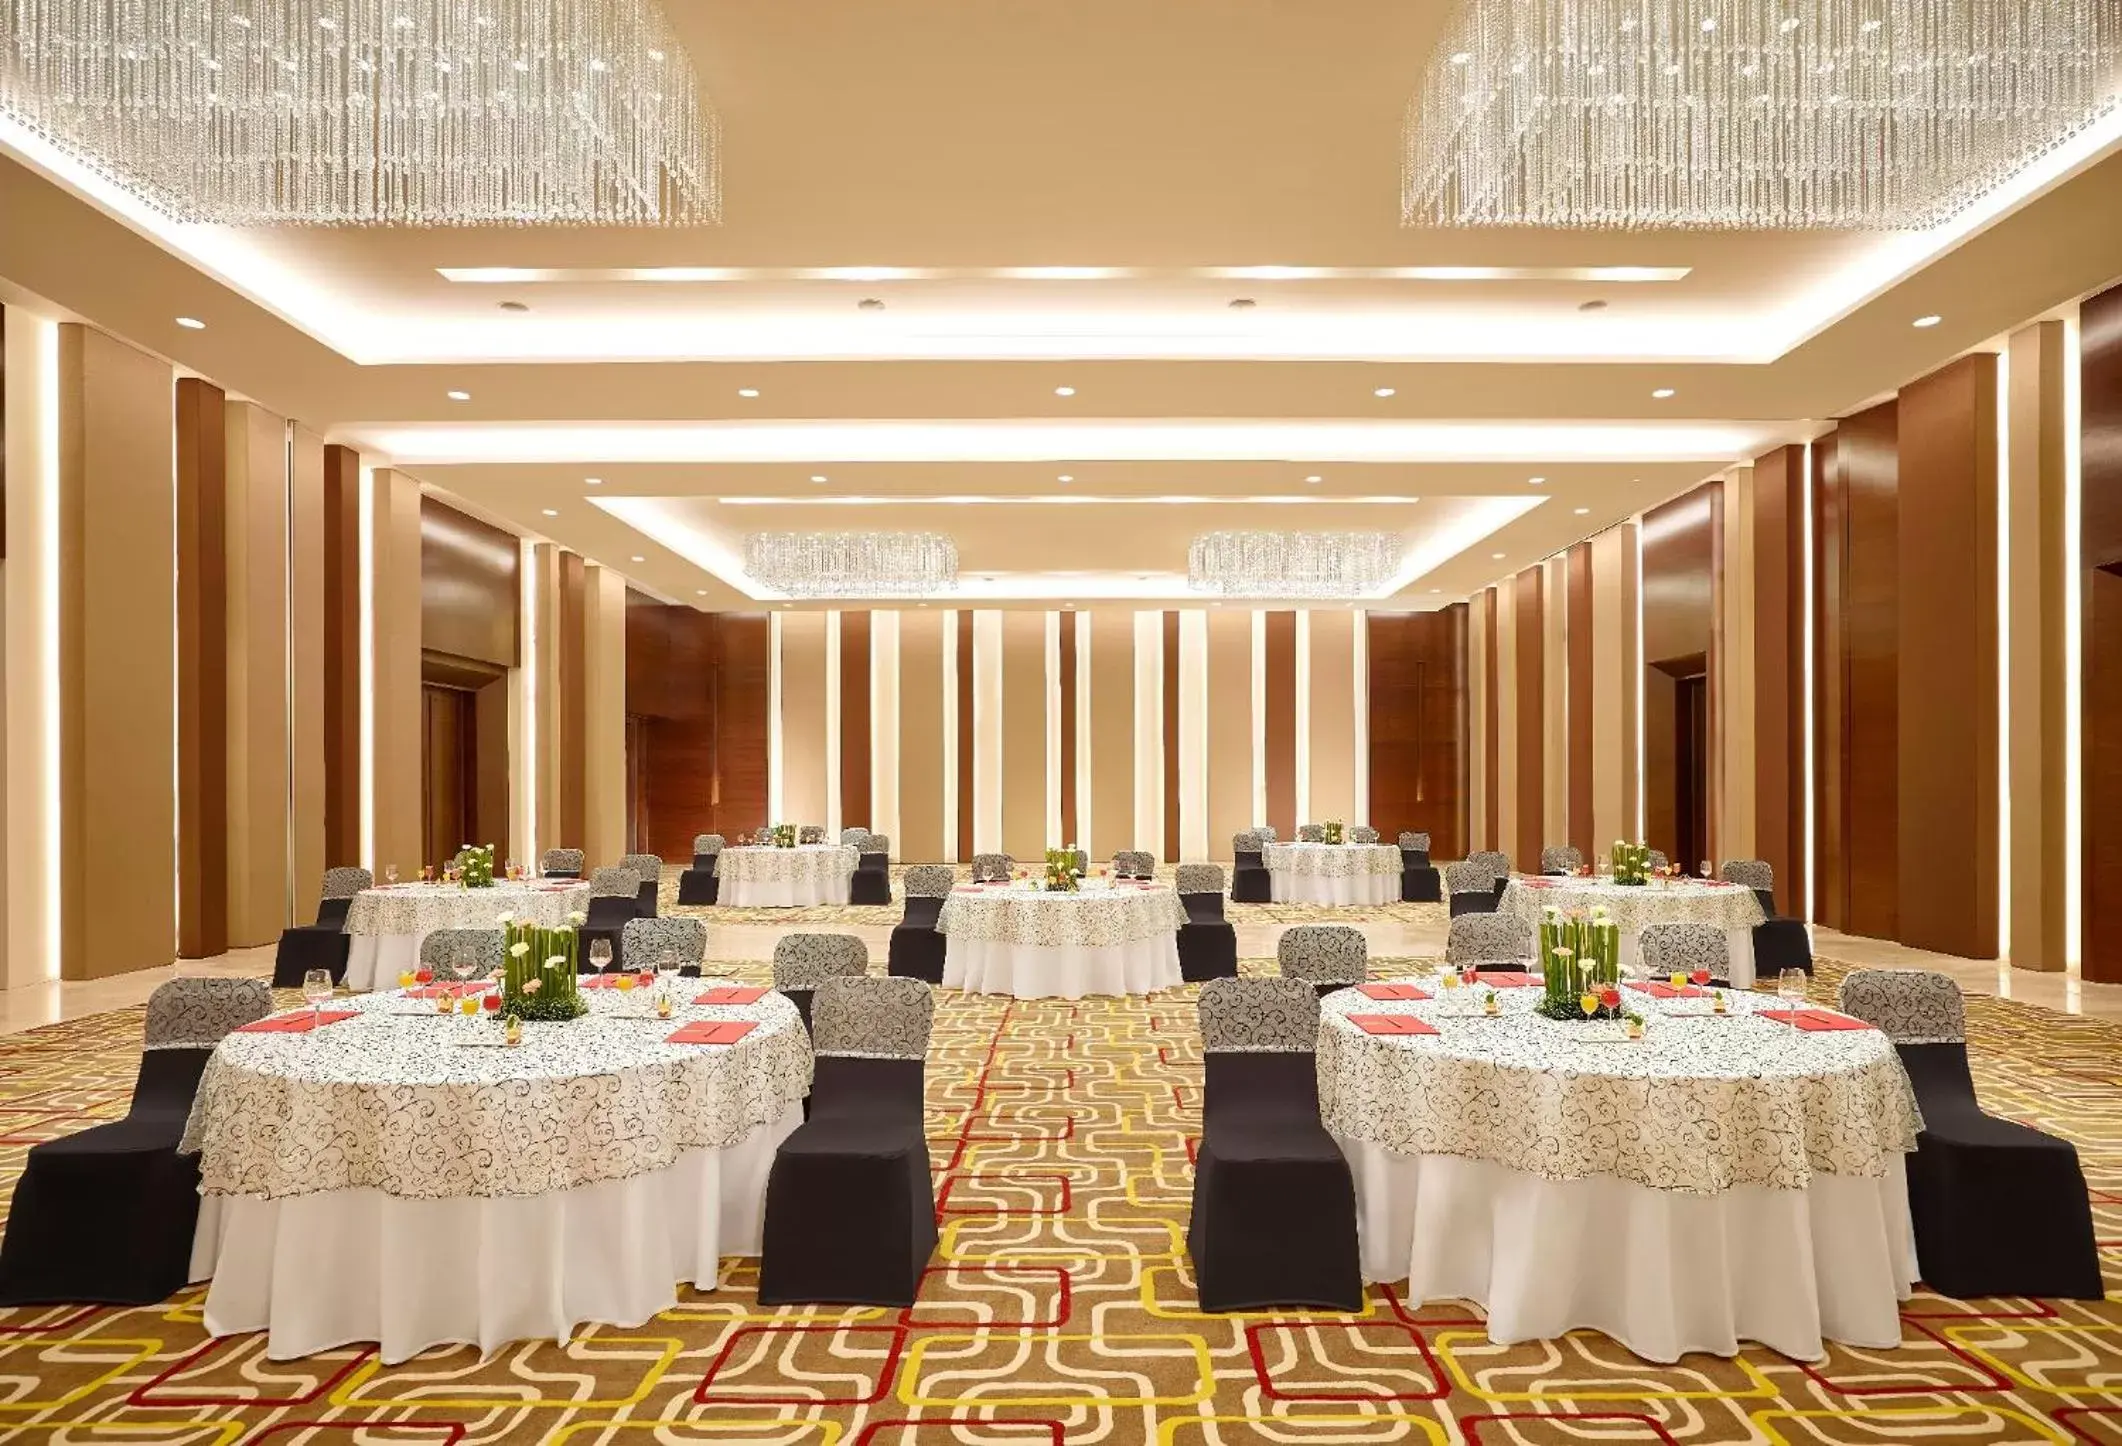 Banquet/Function facilities, Banquet Facilities in Vivanta Pune, Hinjawadi